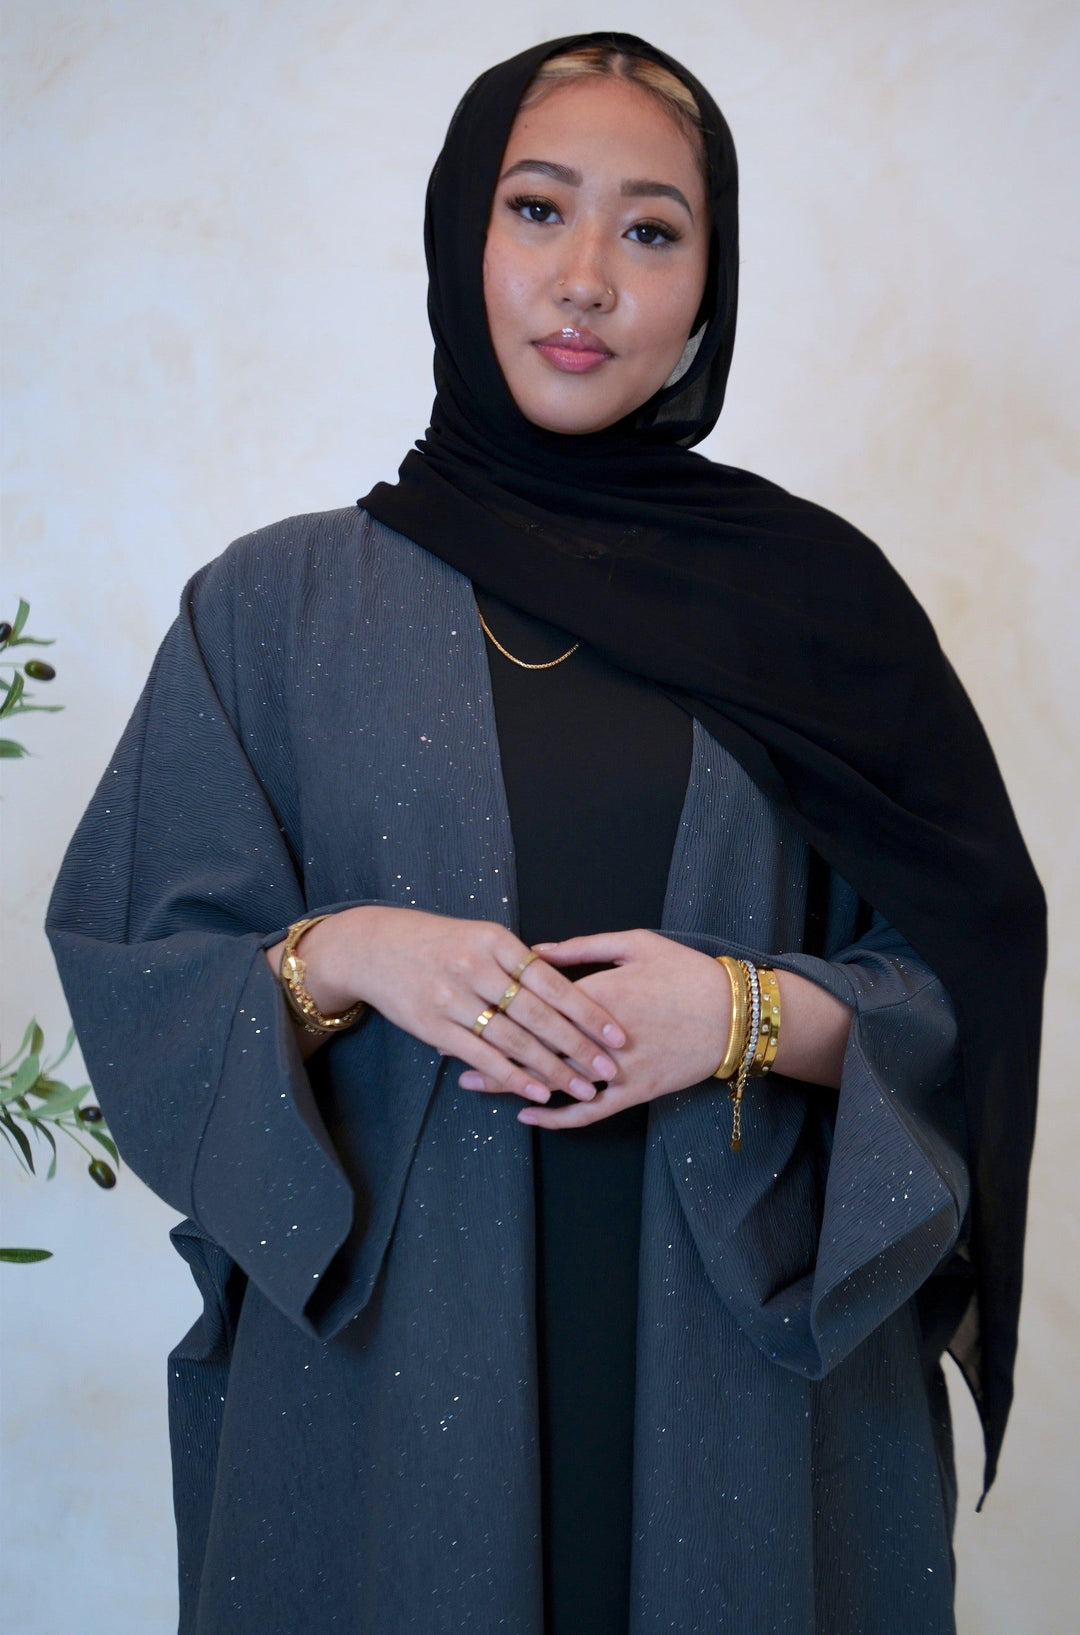 Black Modal Hijab